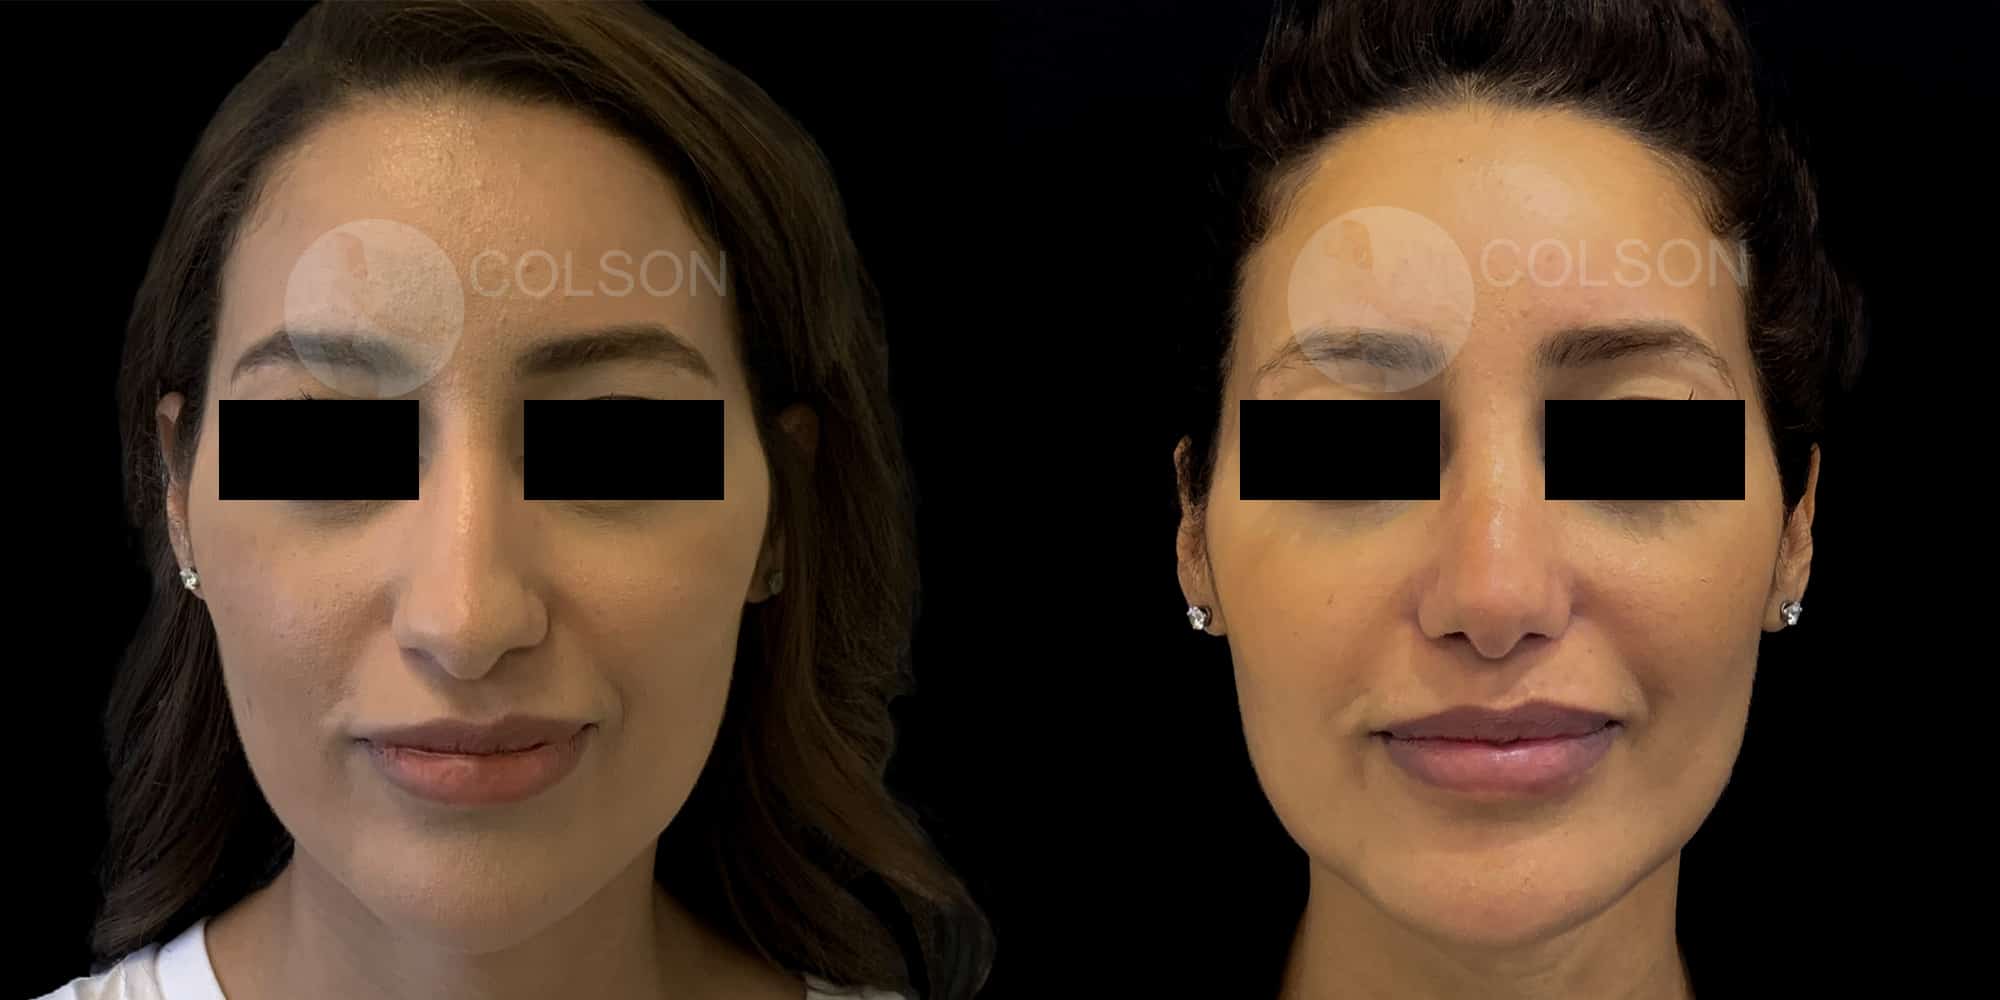 Dr Colson - Chirurgie visage - Rhinoplastie Face